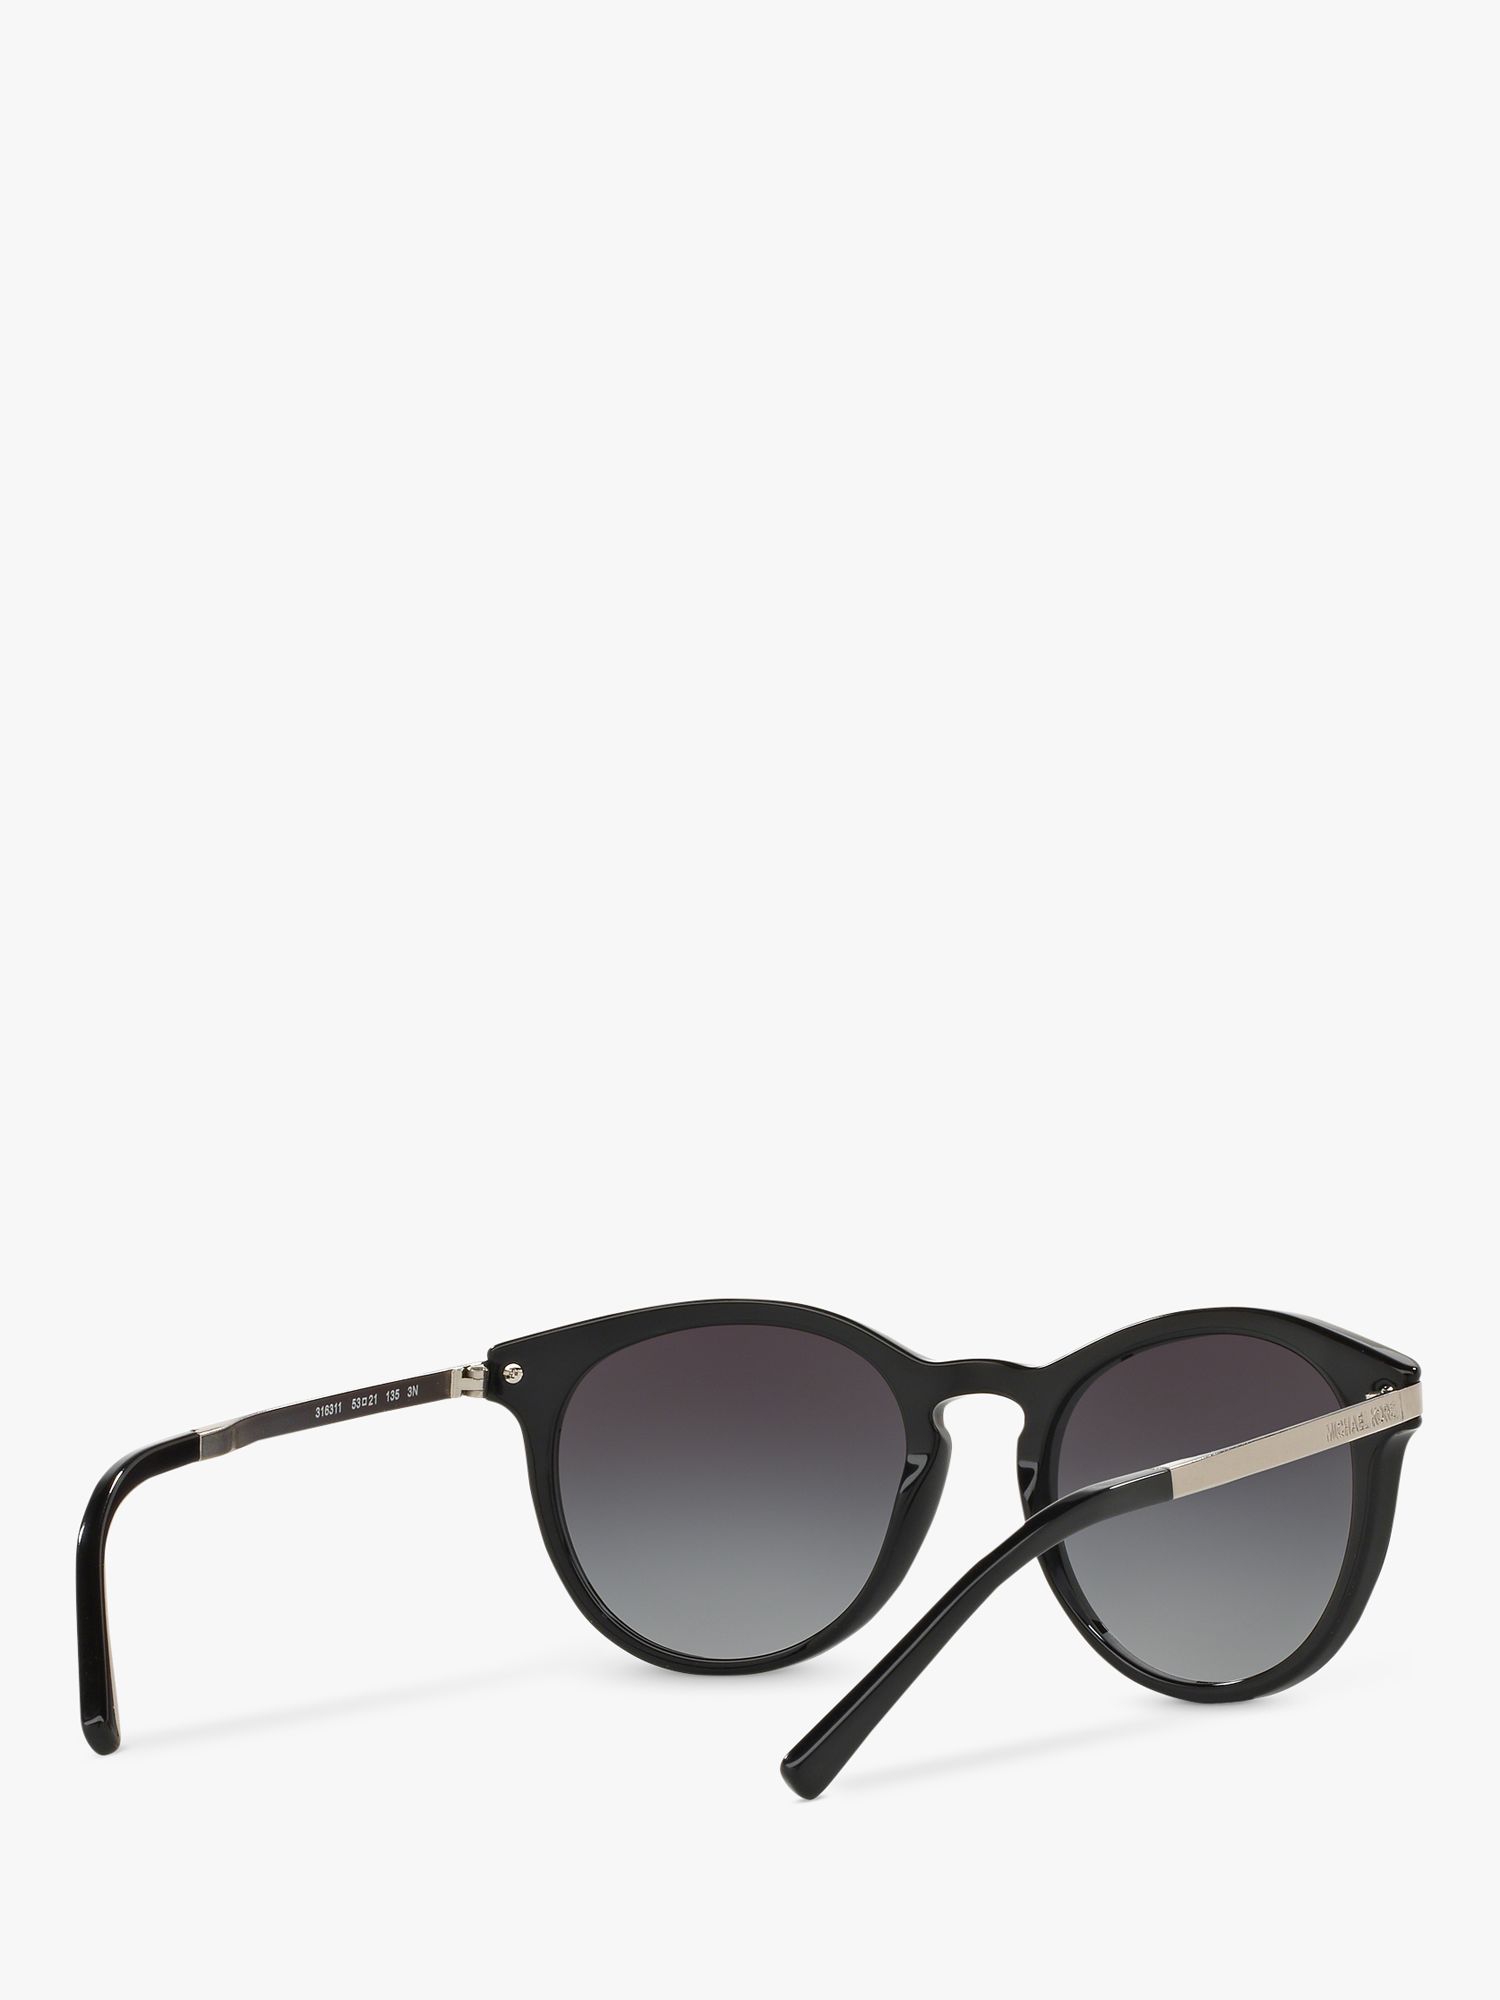 Buy Michael Kors MK2023 Women's Round Sunglasses, Black/Grey Gradient Online at johnlewis.com